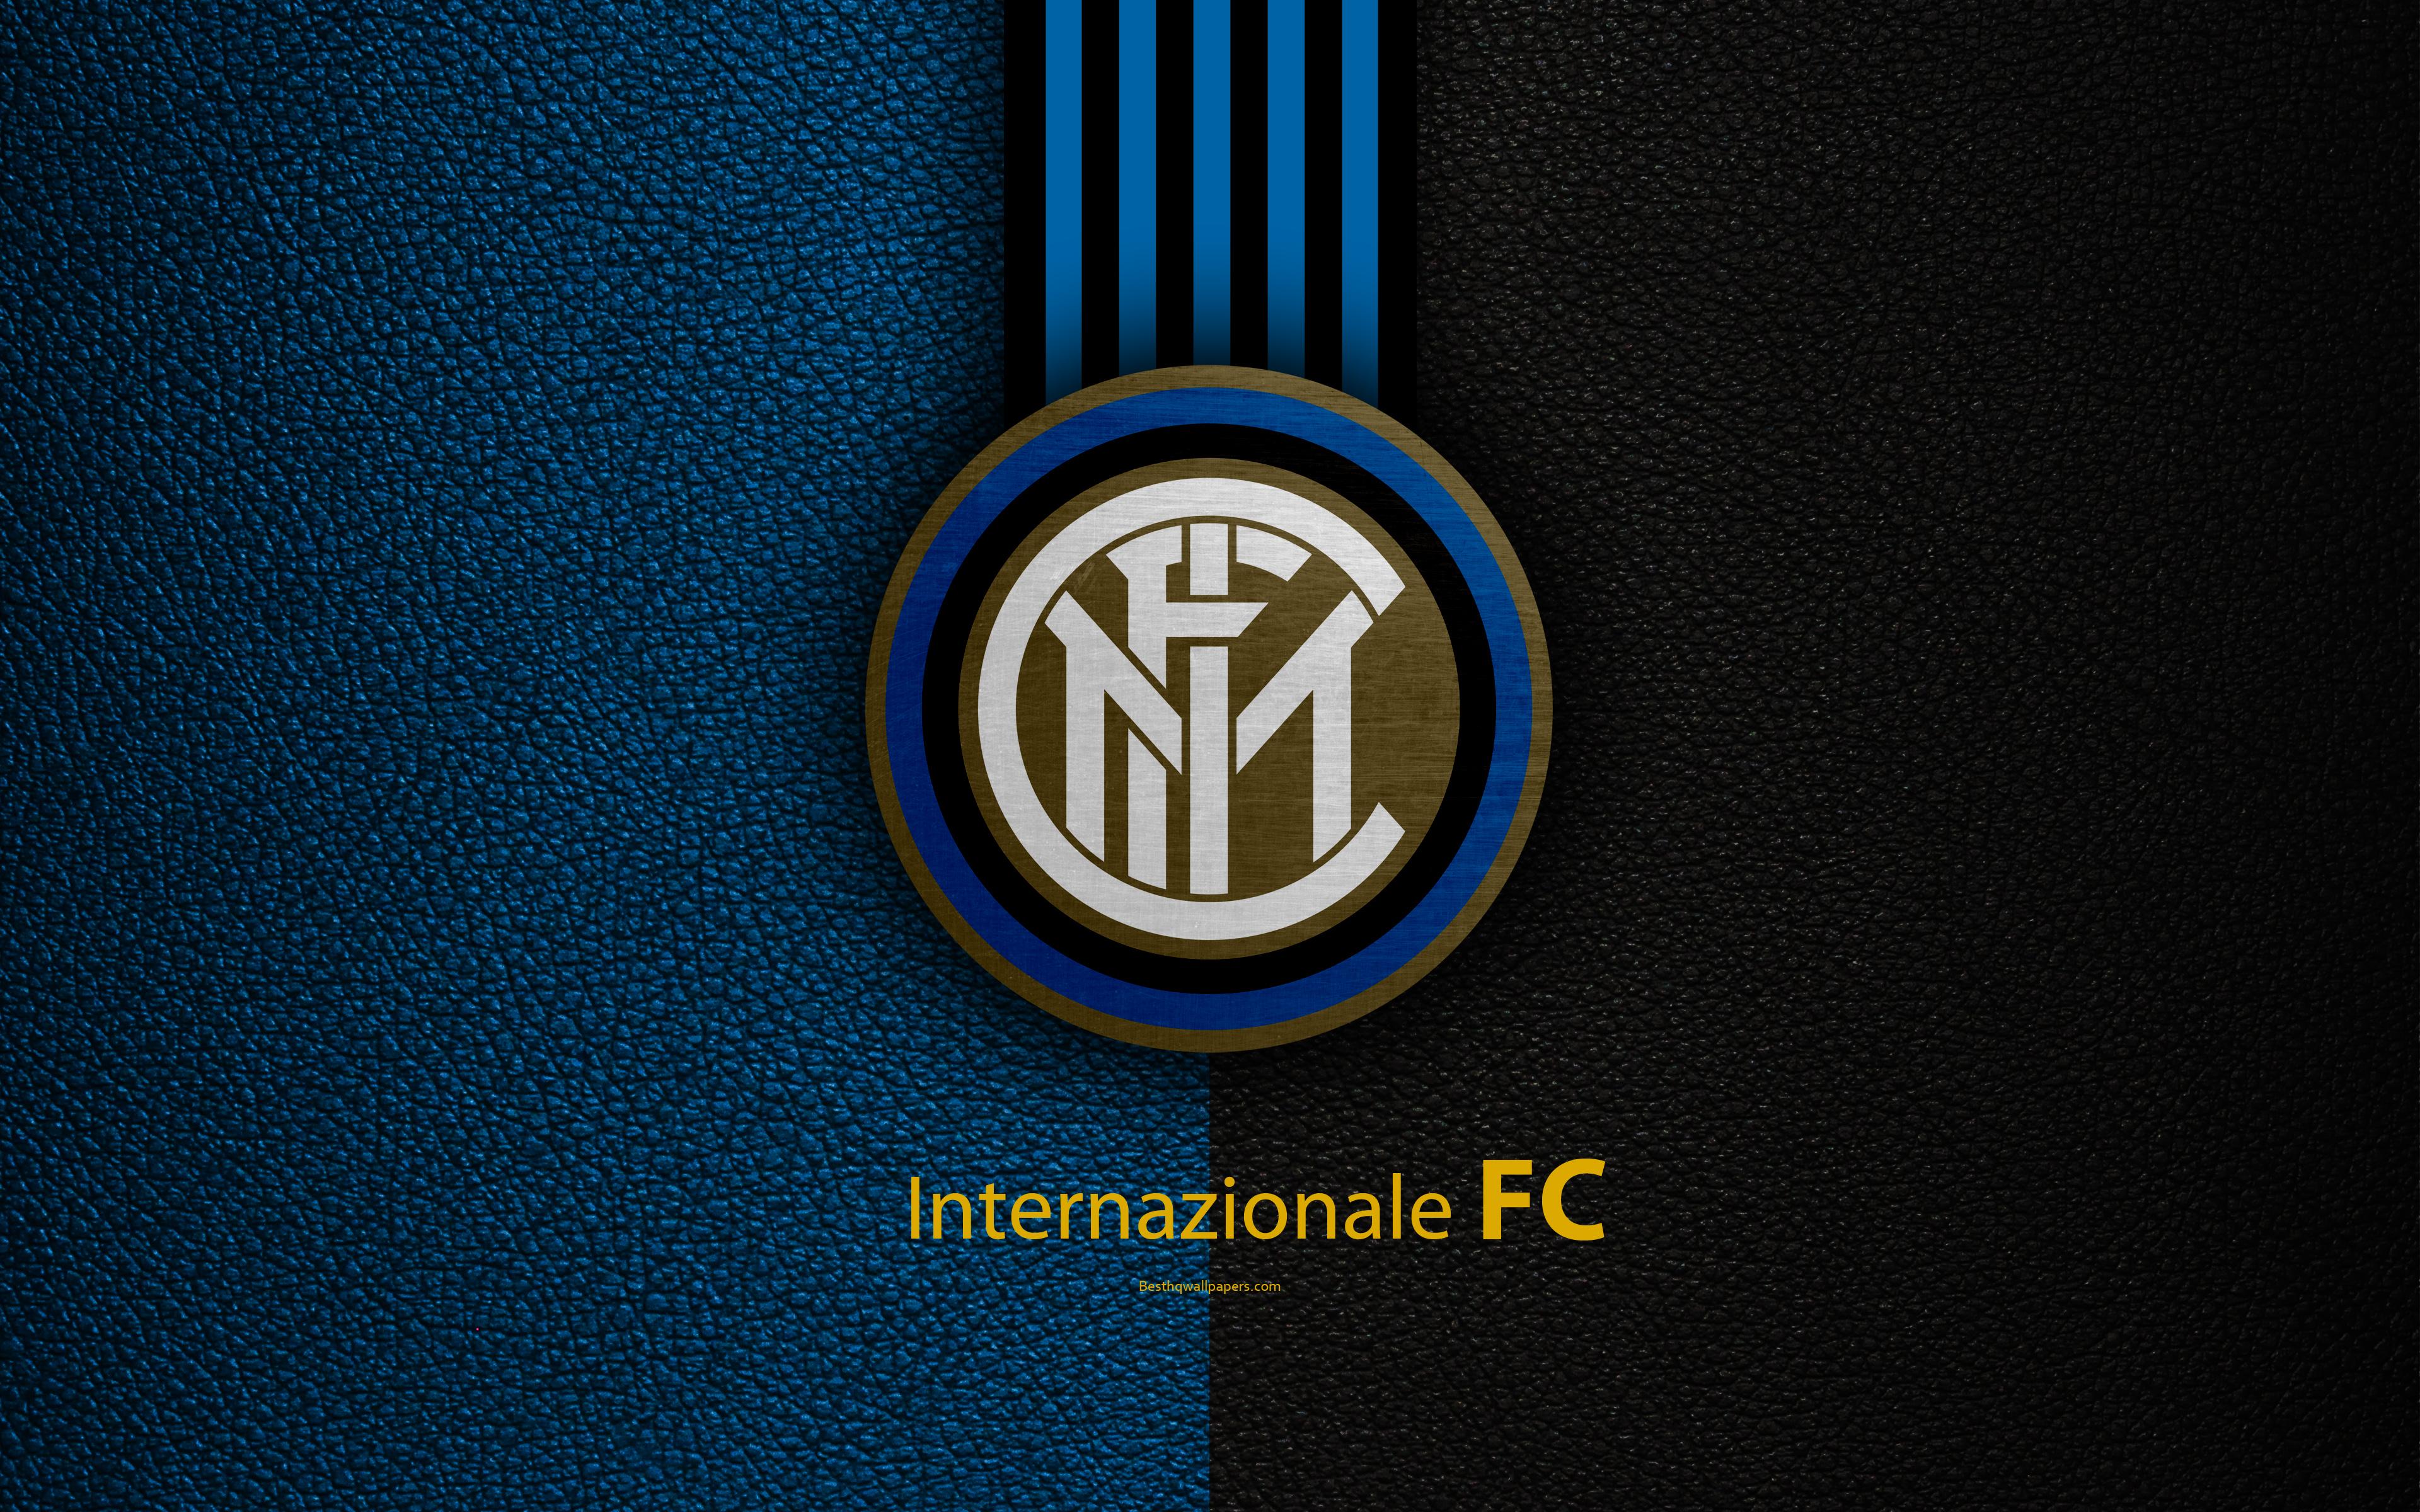 Download wallpaper Internazionale FC, 4k, Italian football club